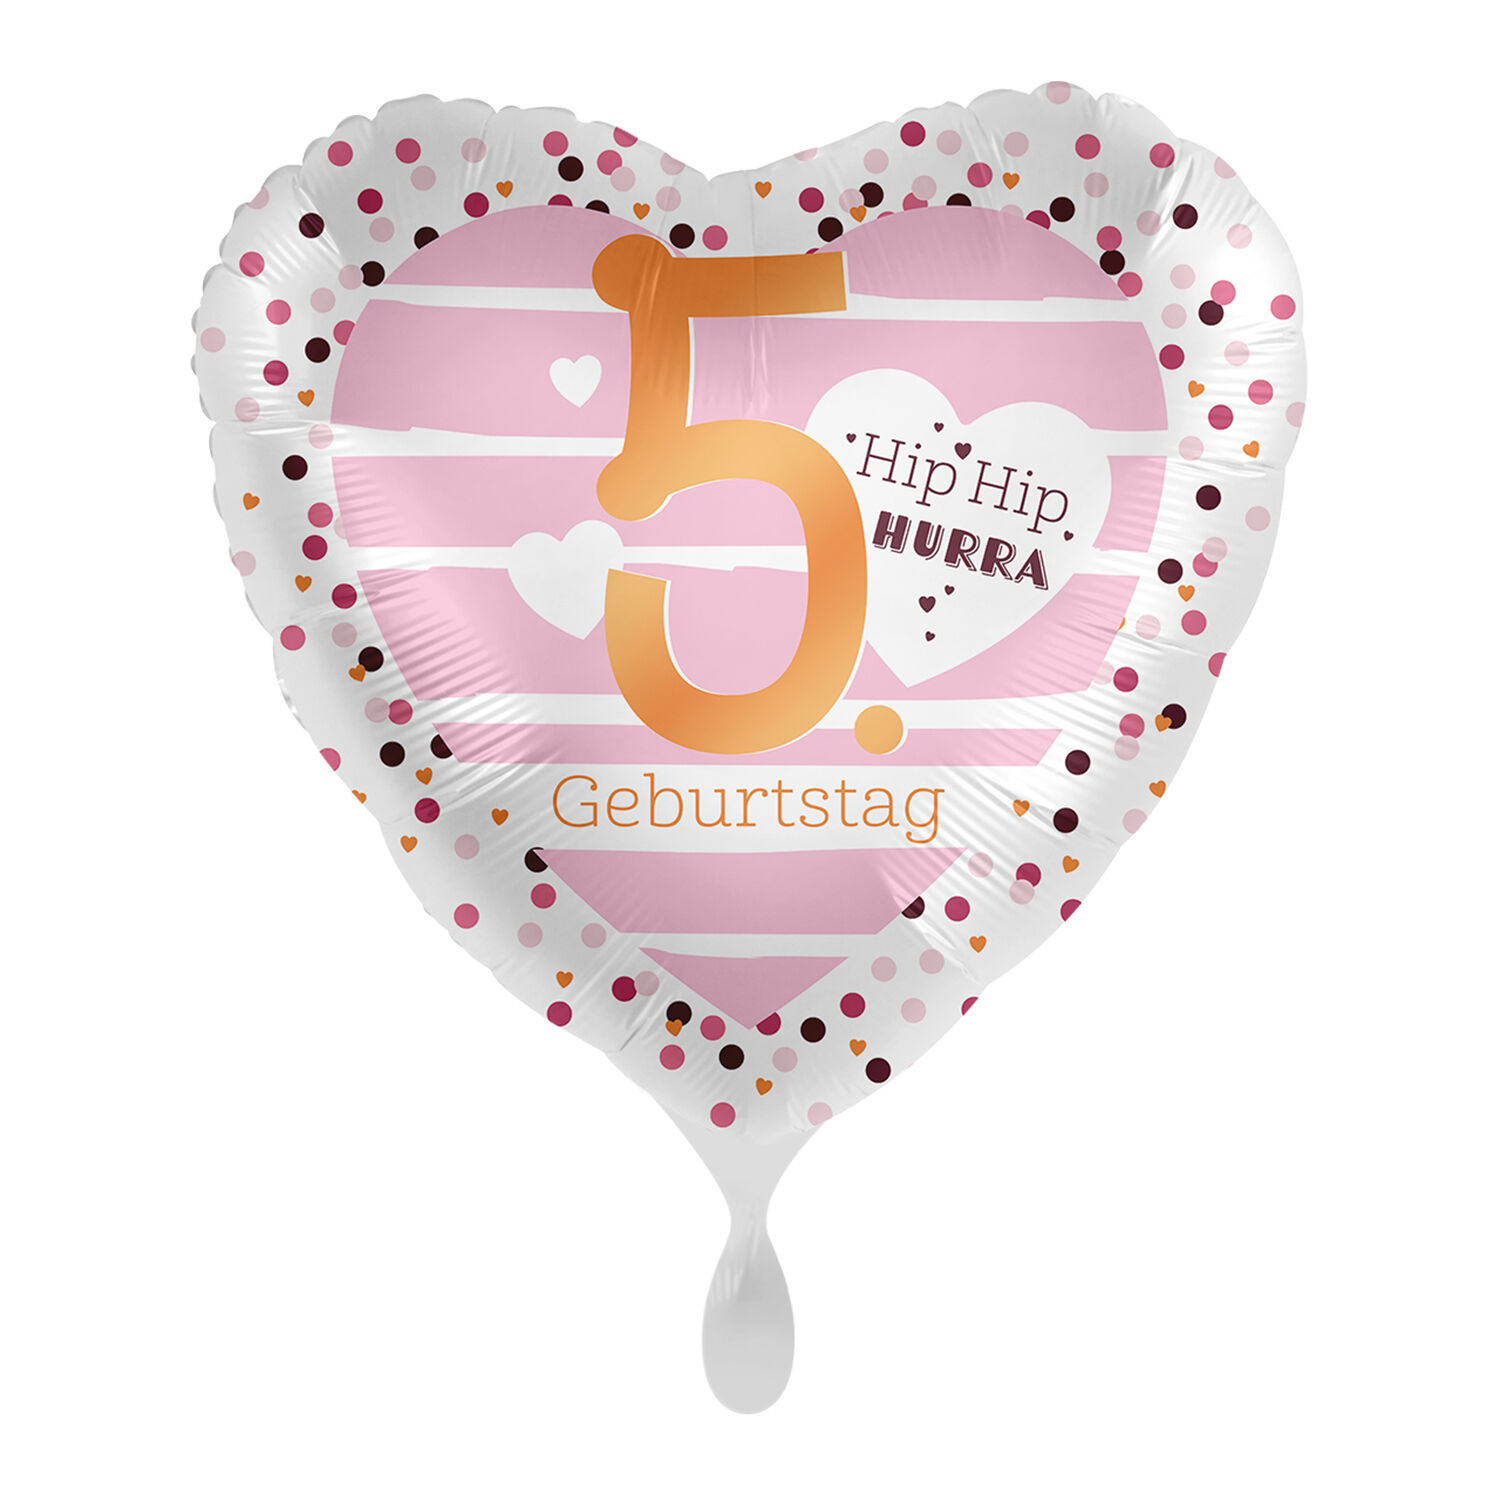 NEU Folienballon Pink Hearts - Hip Hip Hurra 5. Geburtstag - ca. 45cm Durchmesser